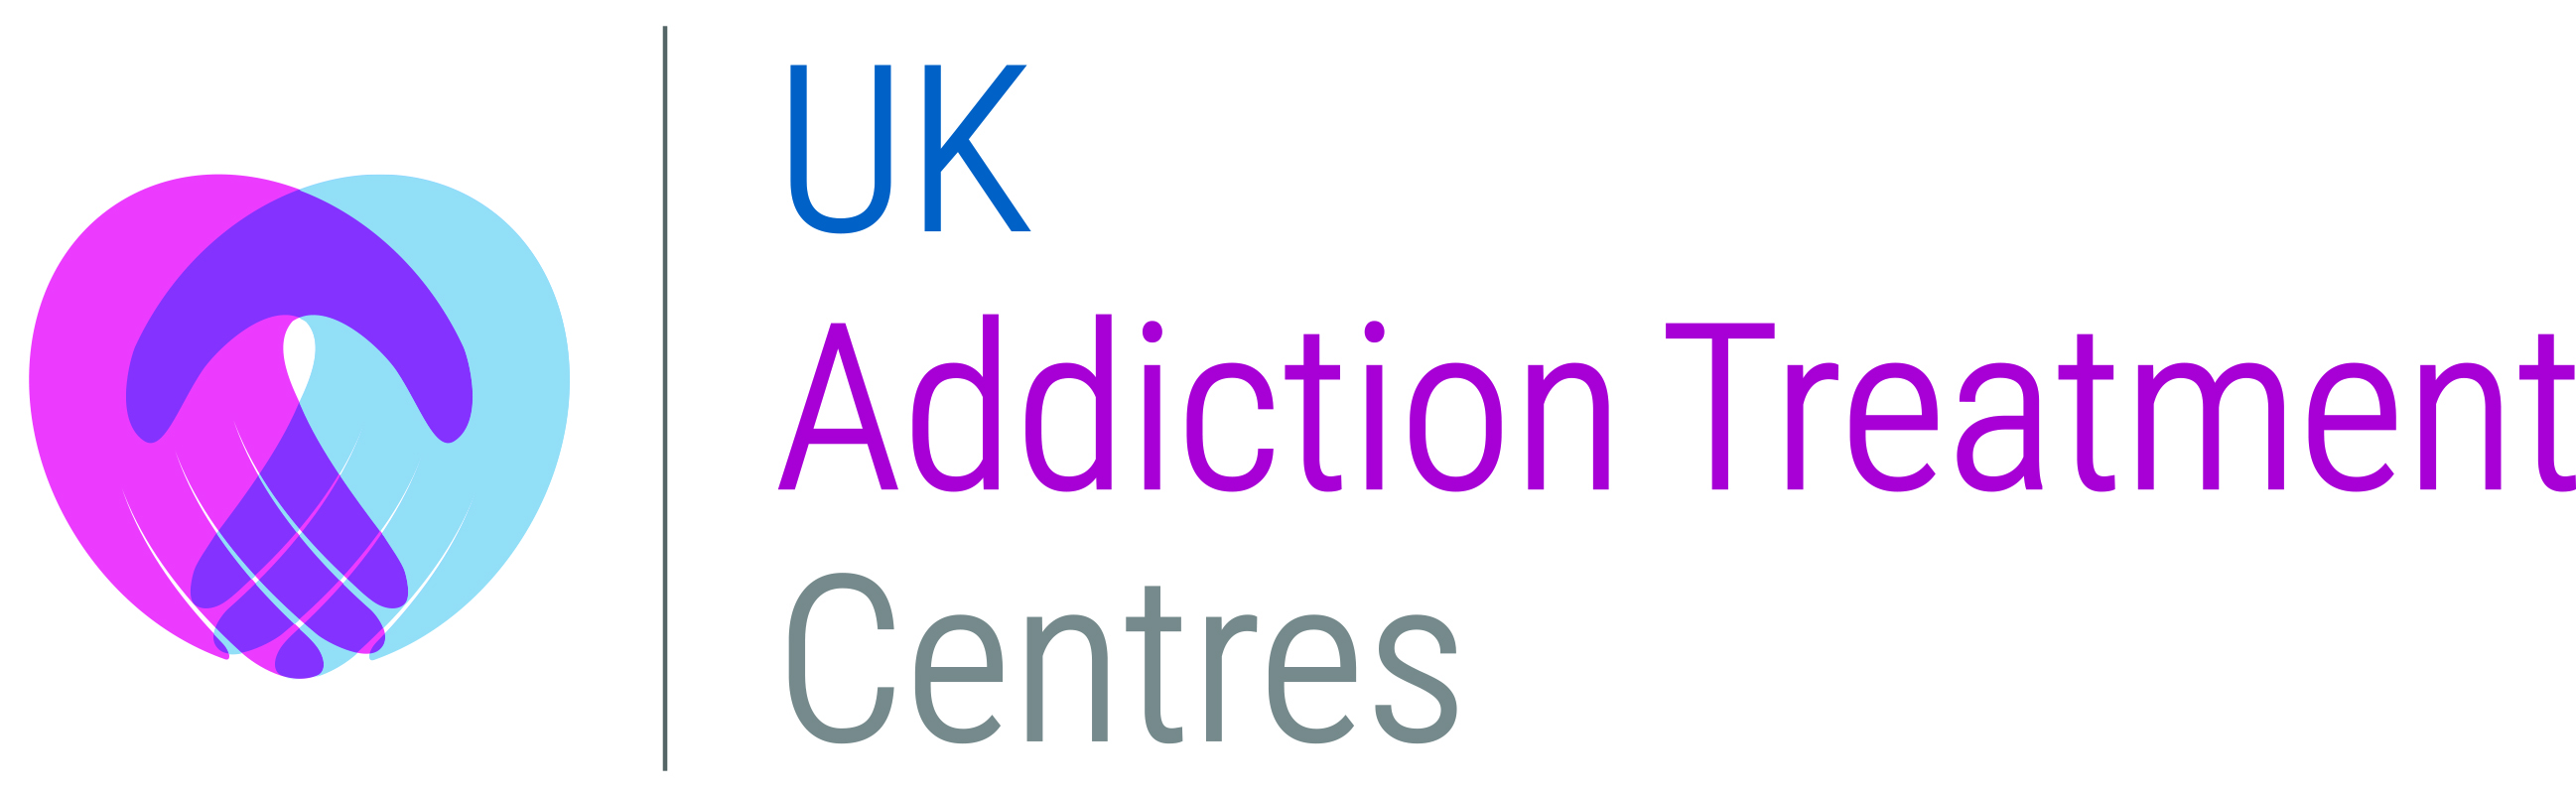 UK Addiction Treatment Centres